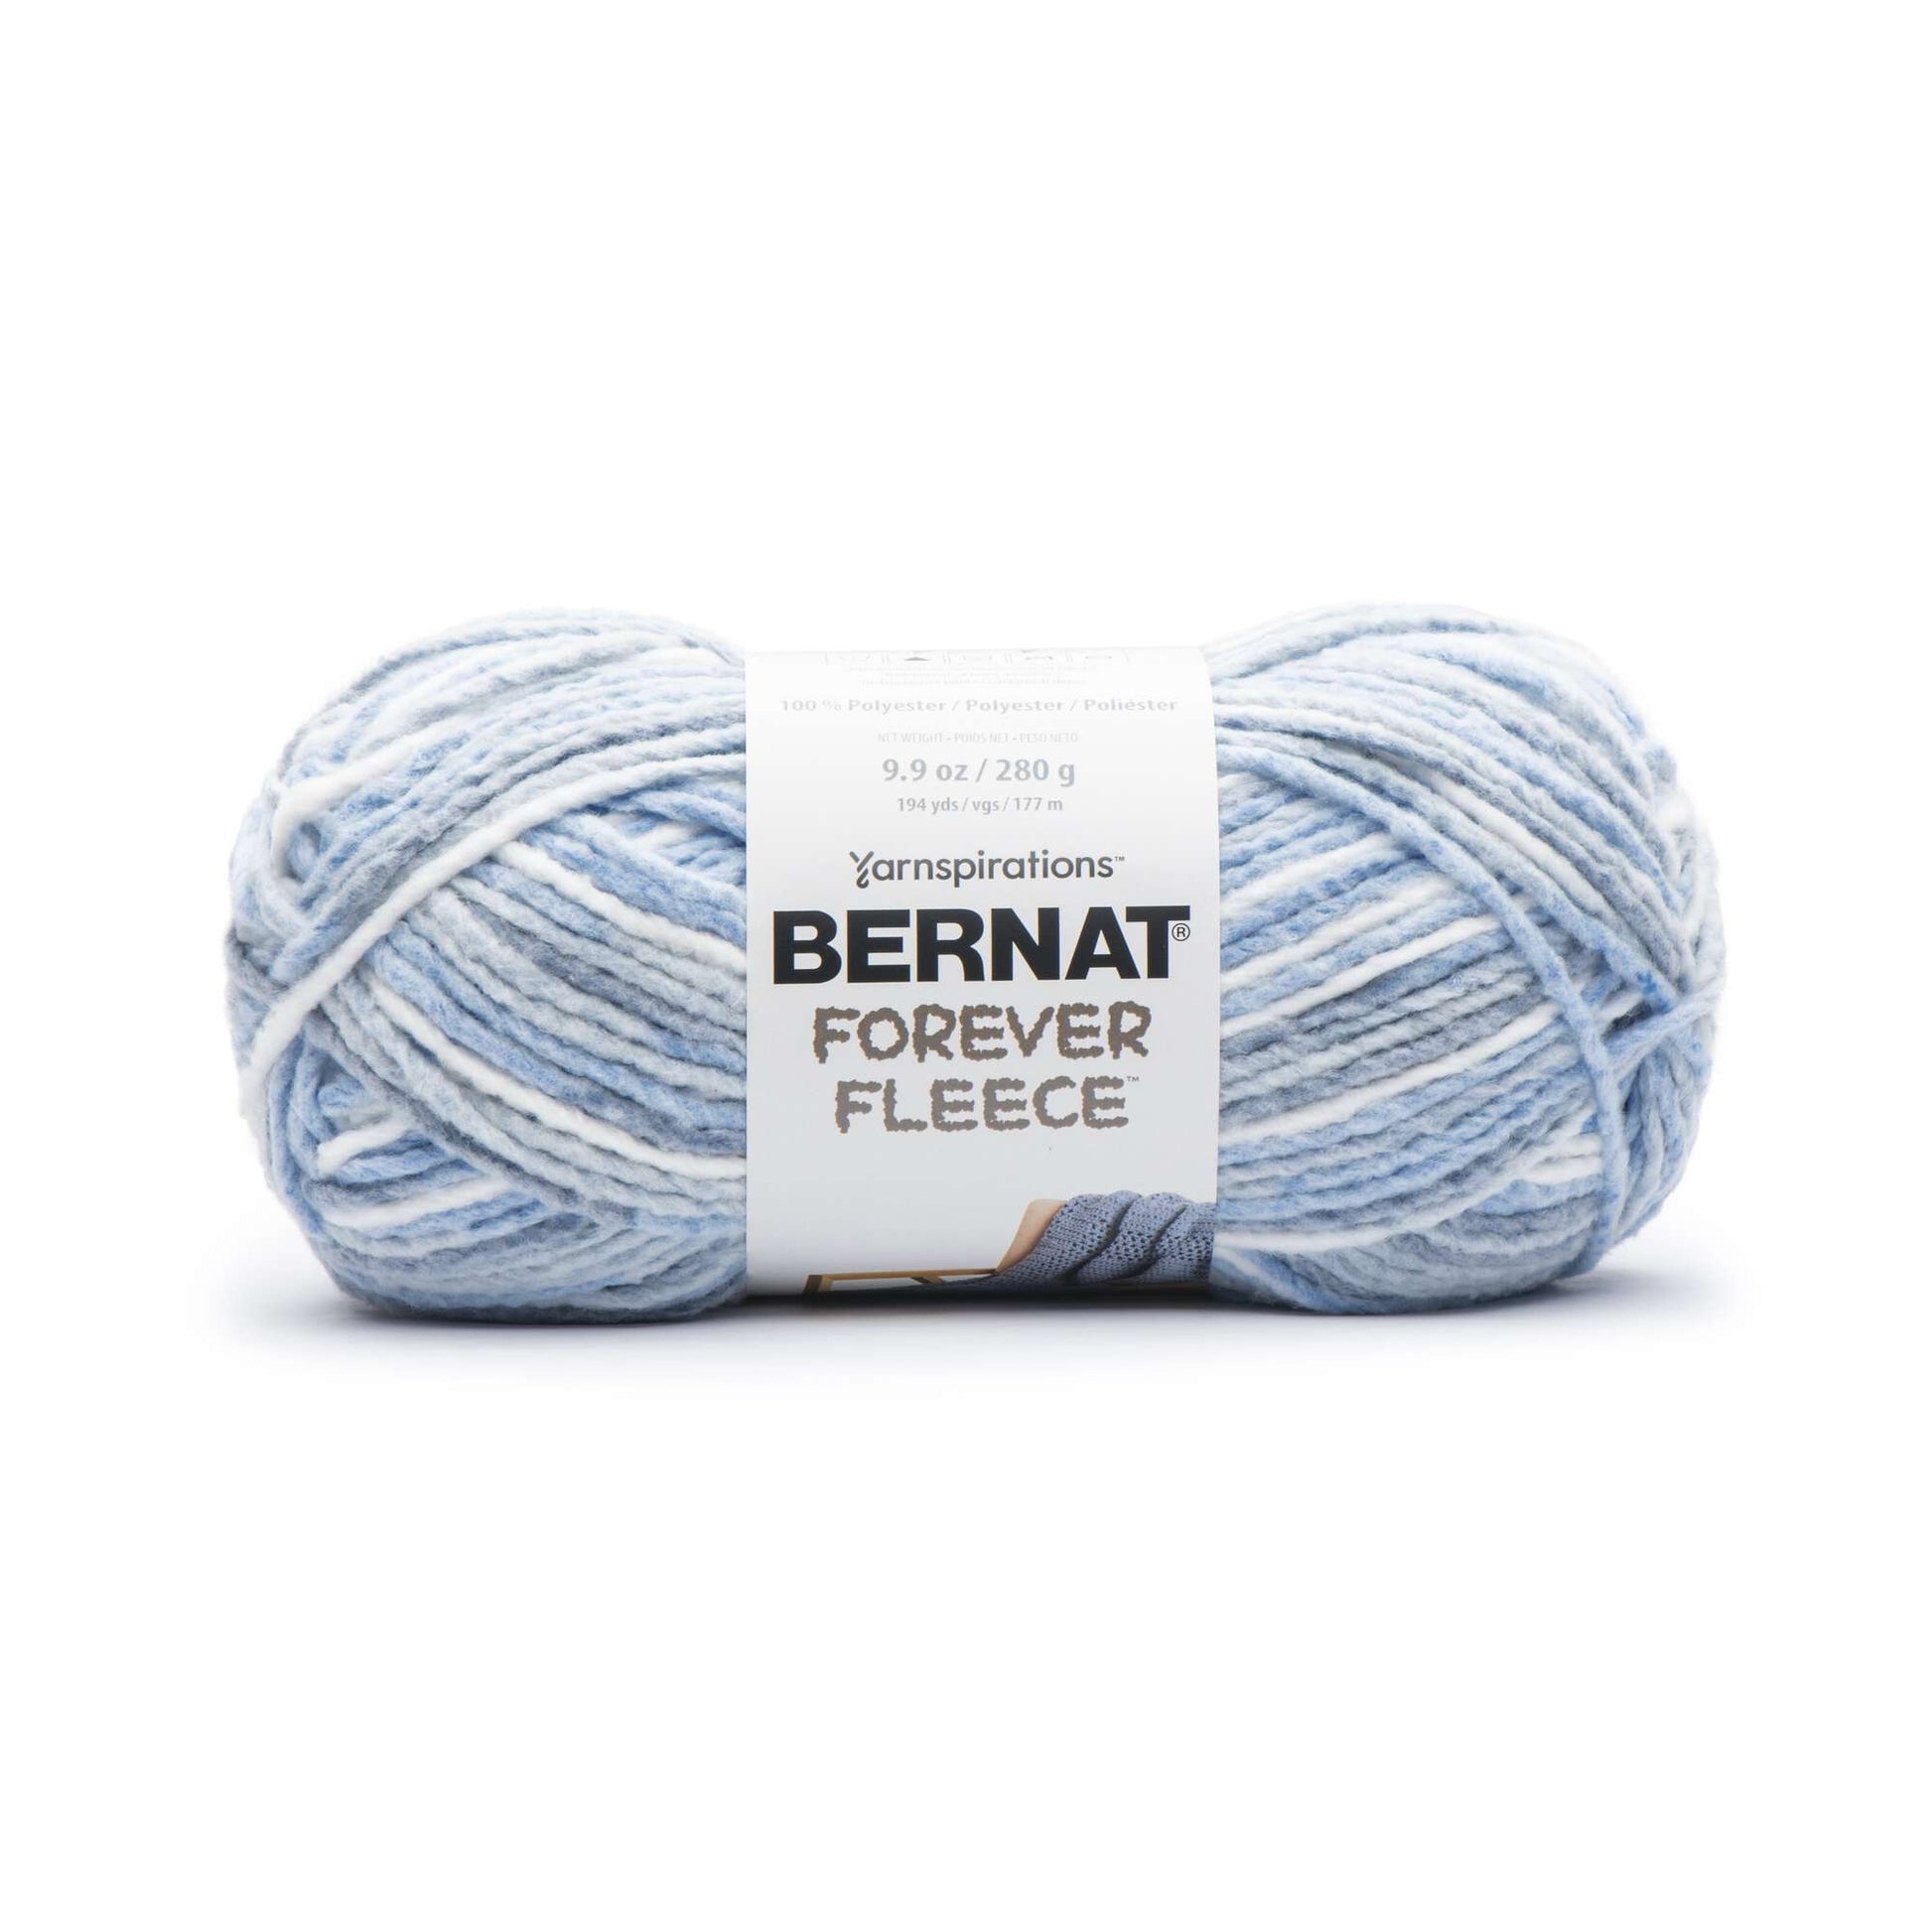 2 Pack Bernat Forever Fleece Yarn-Smoke 166061-61032 - GettyCrafts